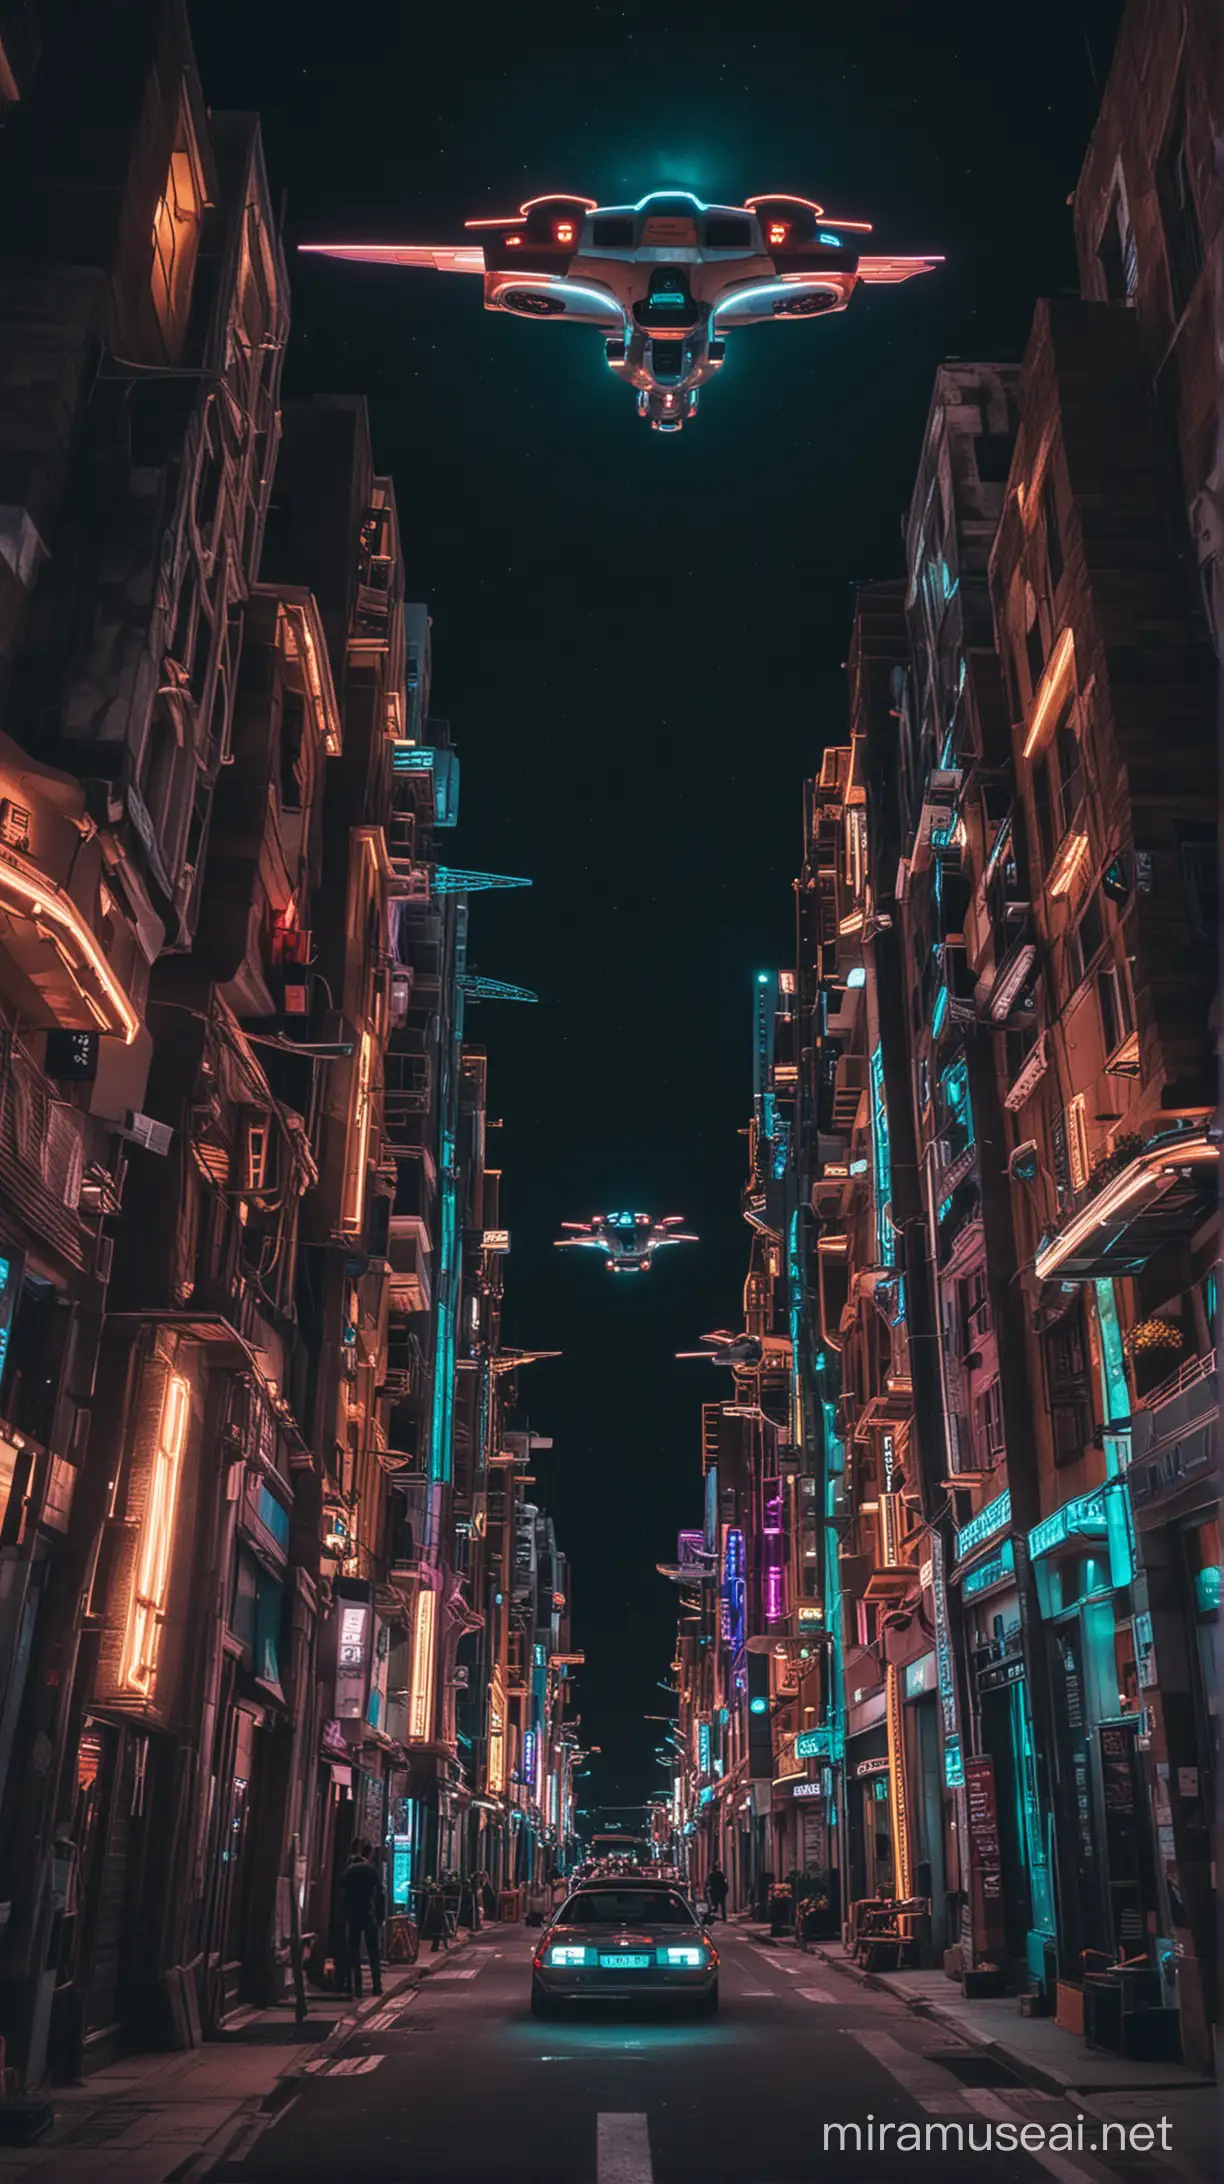 Futuristic Ecumenopolis Night Scene with Neonlit Skyscrapers and Hovering Vehicles